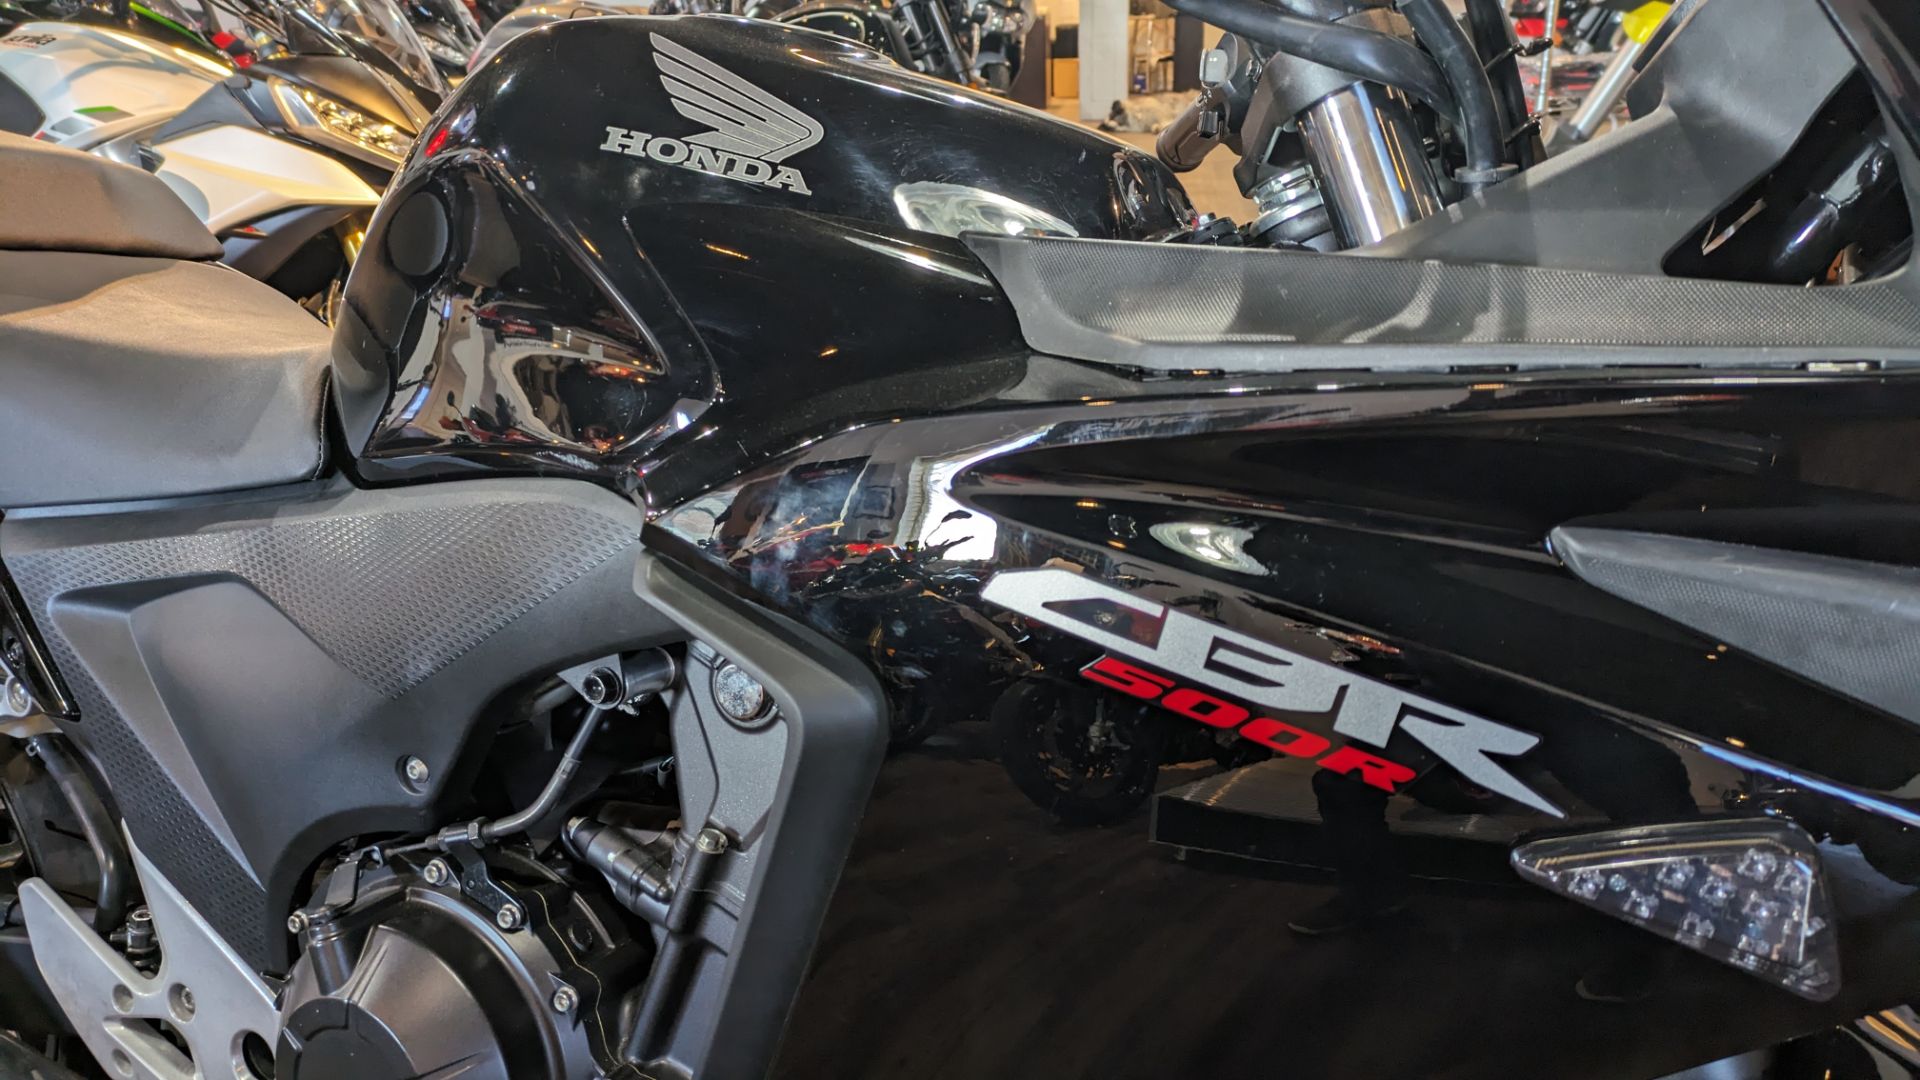 2013 Honda CBR®500R in Denver, Colorado - Photo 2